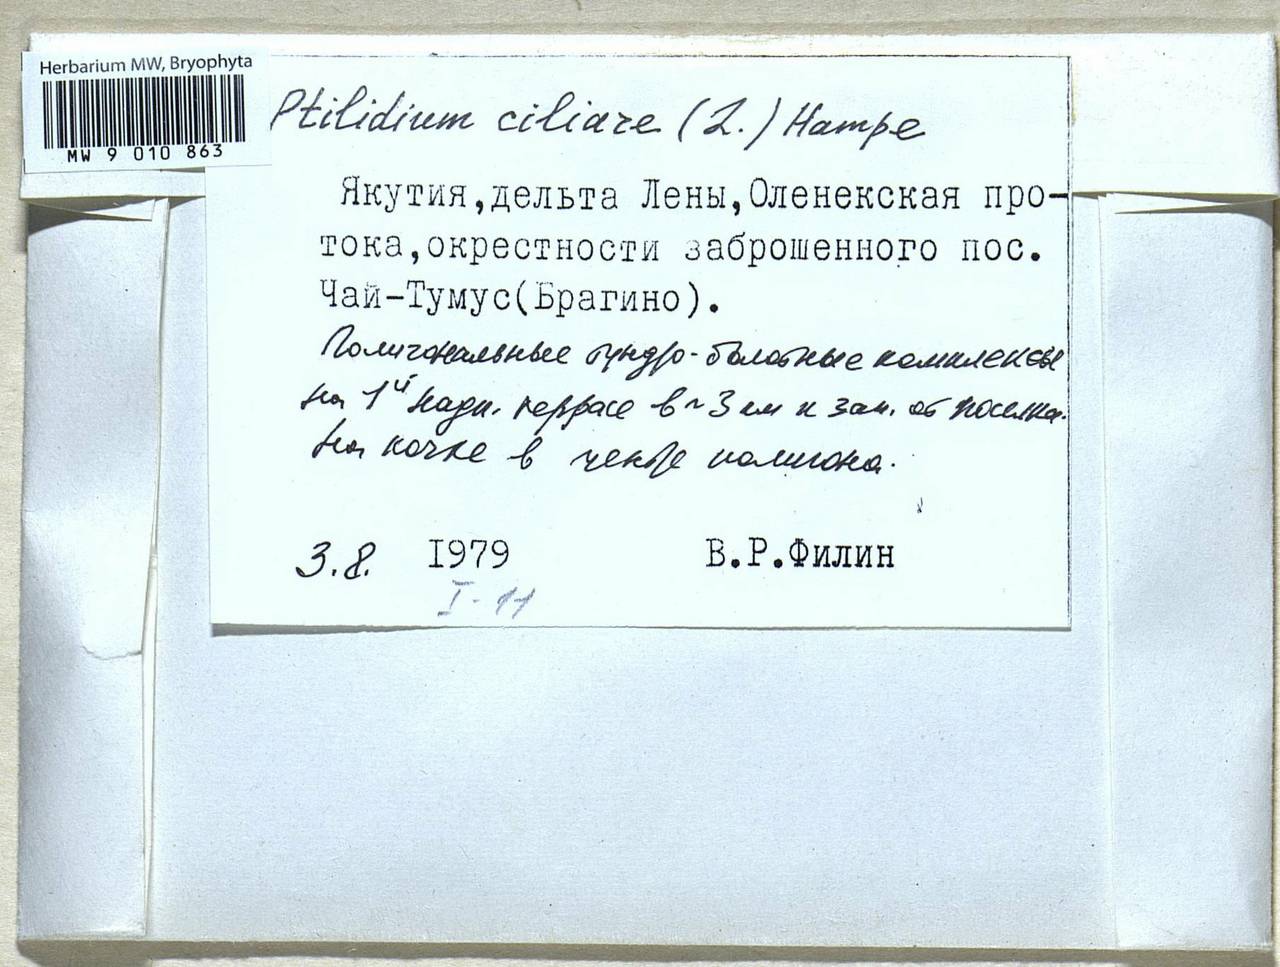 Ptilidium ciliare (L.) Hampe, Гербарий мохообразных, Мхи - Якутия (B19) (Россия)